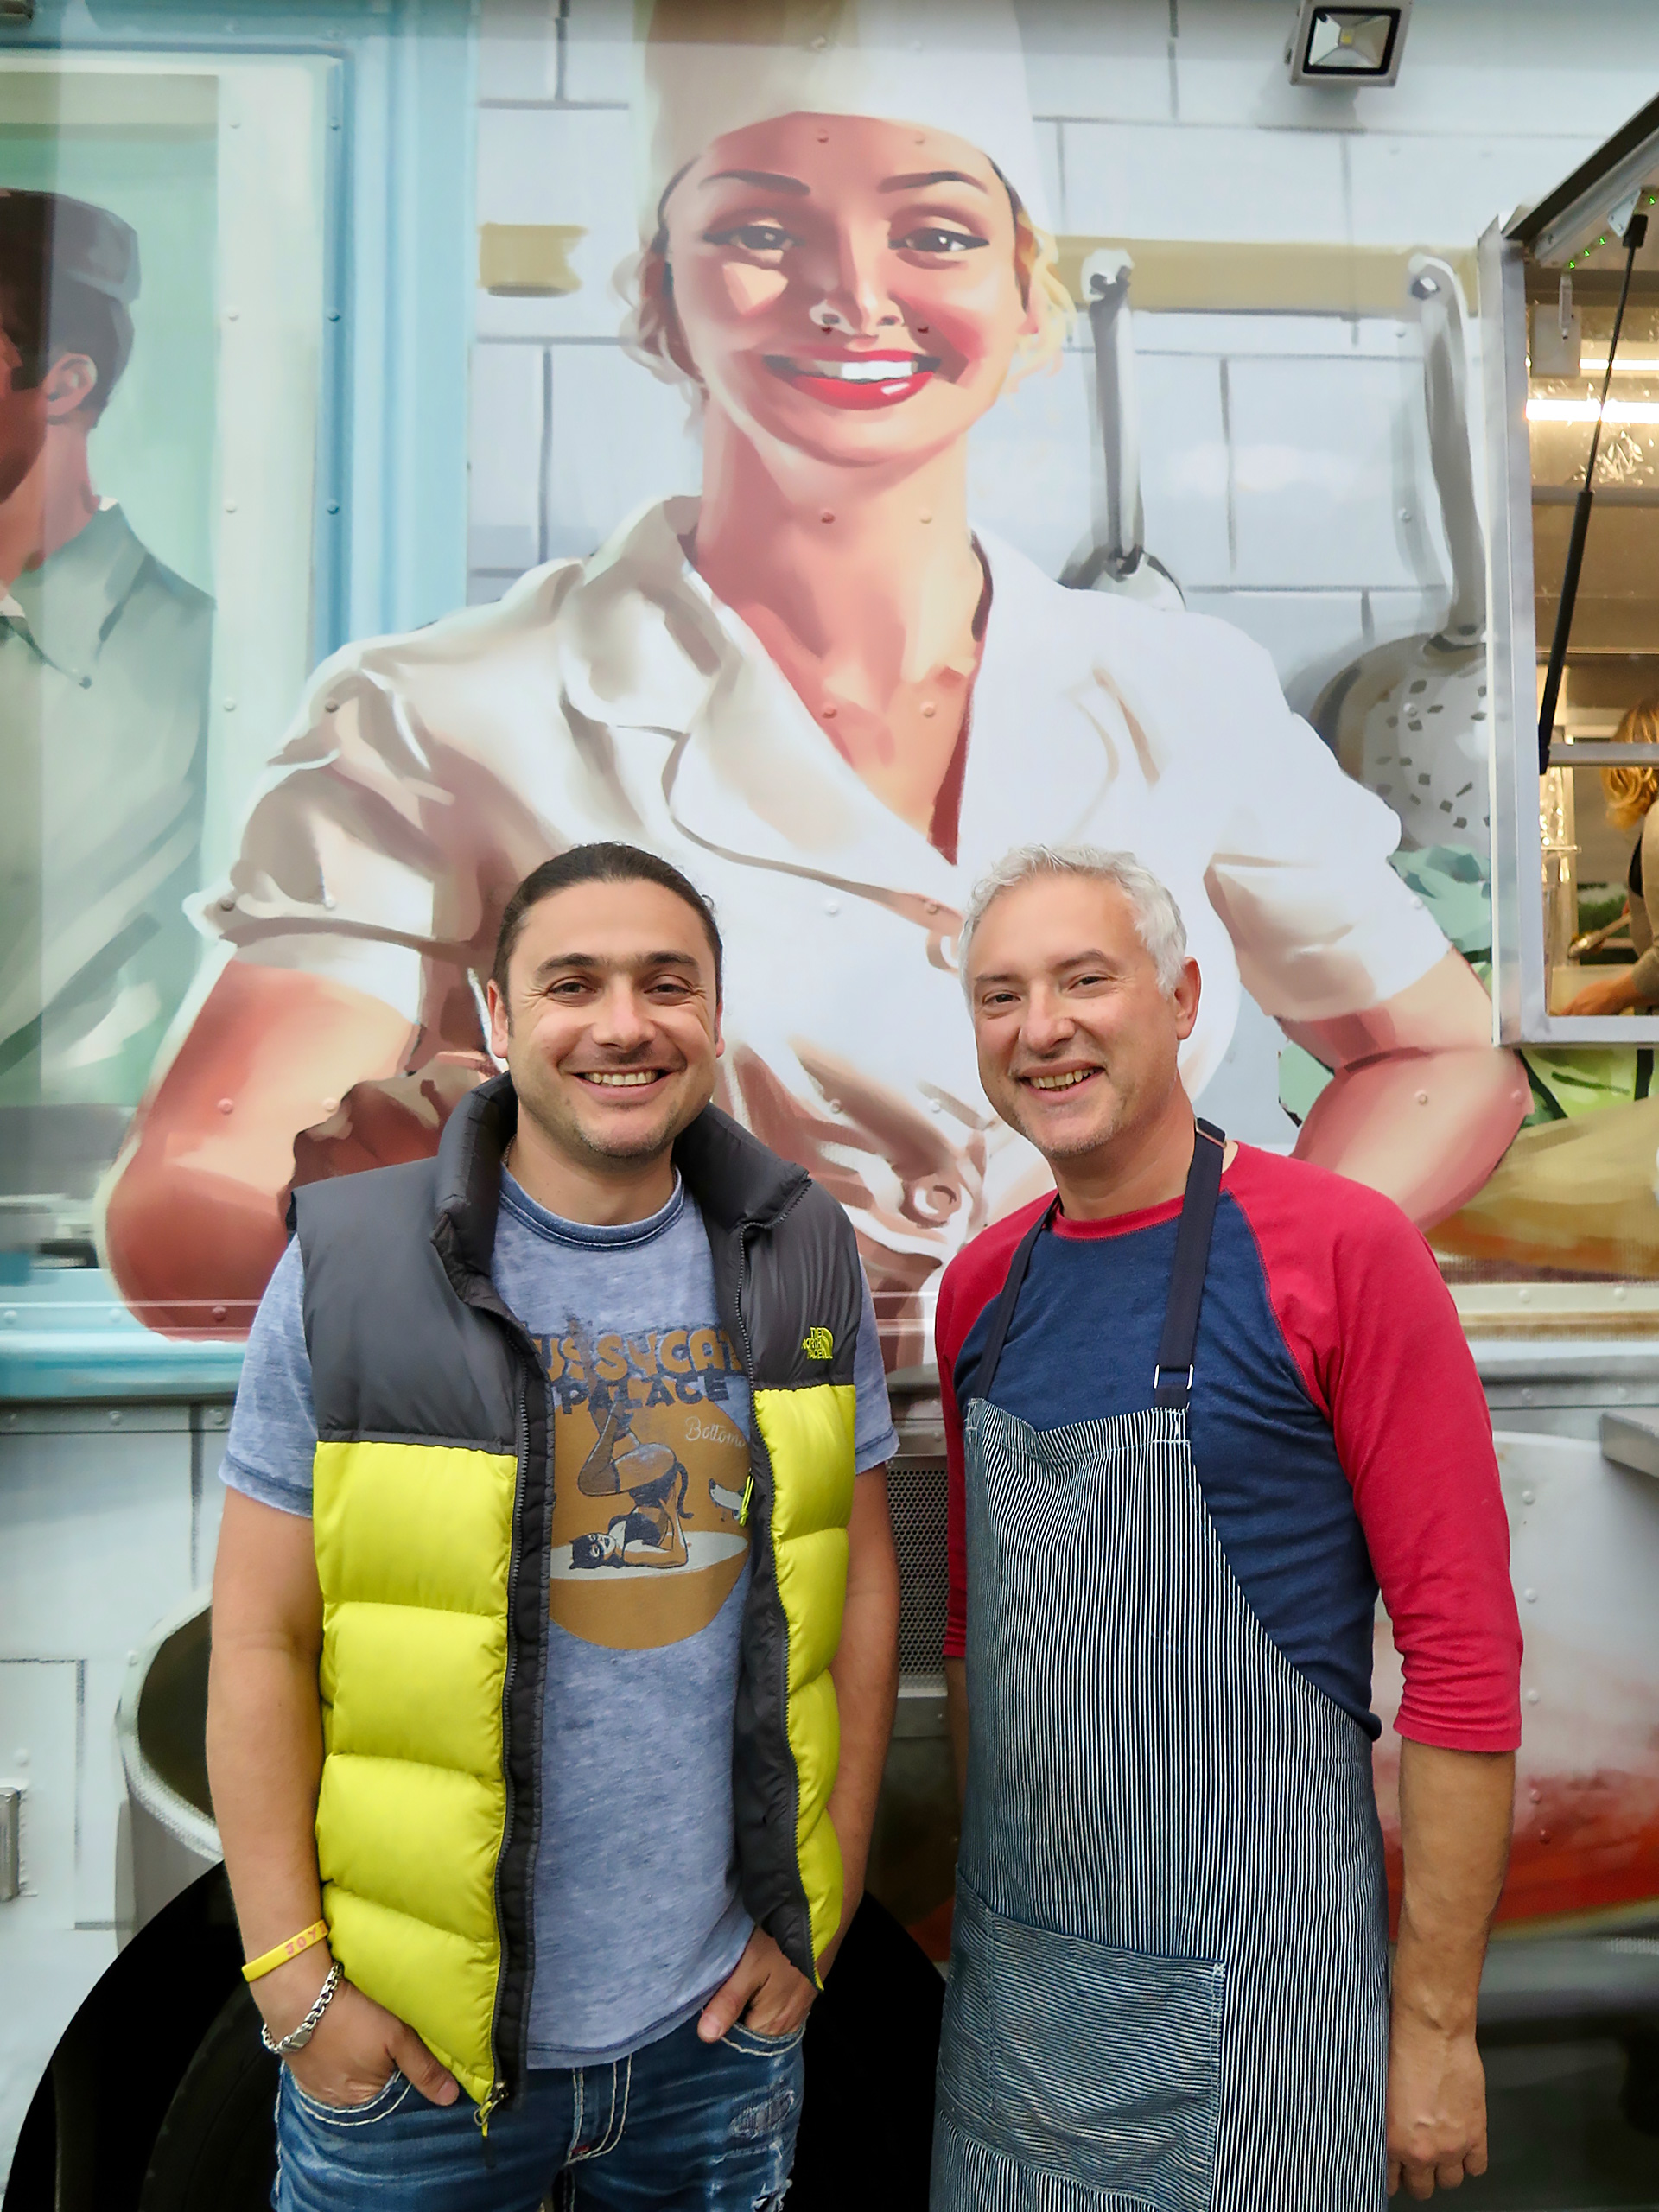 Meet the cooks behind the Borsch Mobile: Kirill Deninzon and Igor Teplitsky.